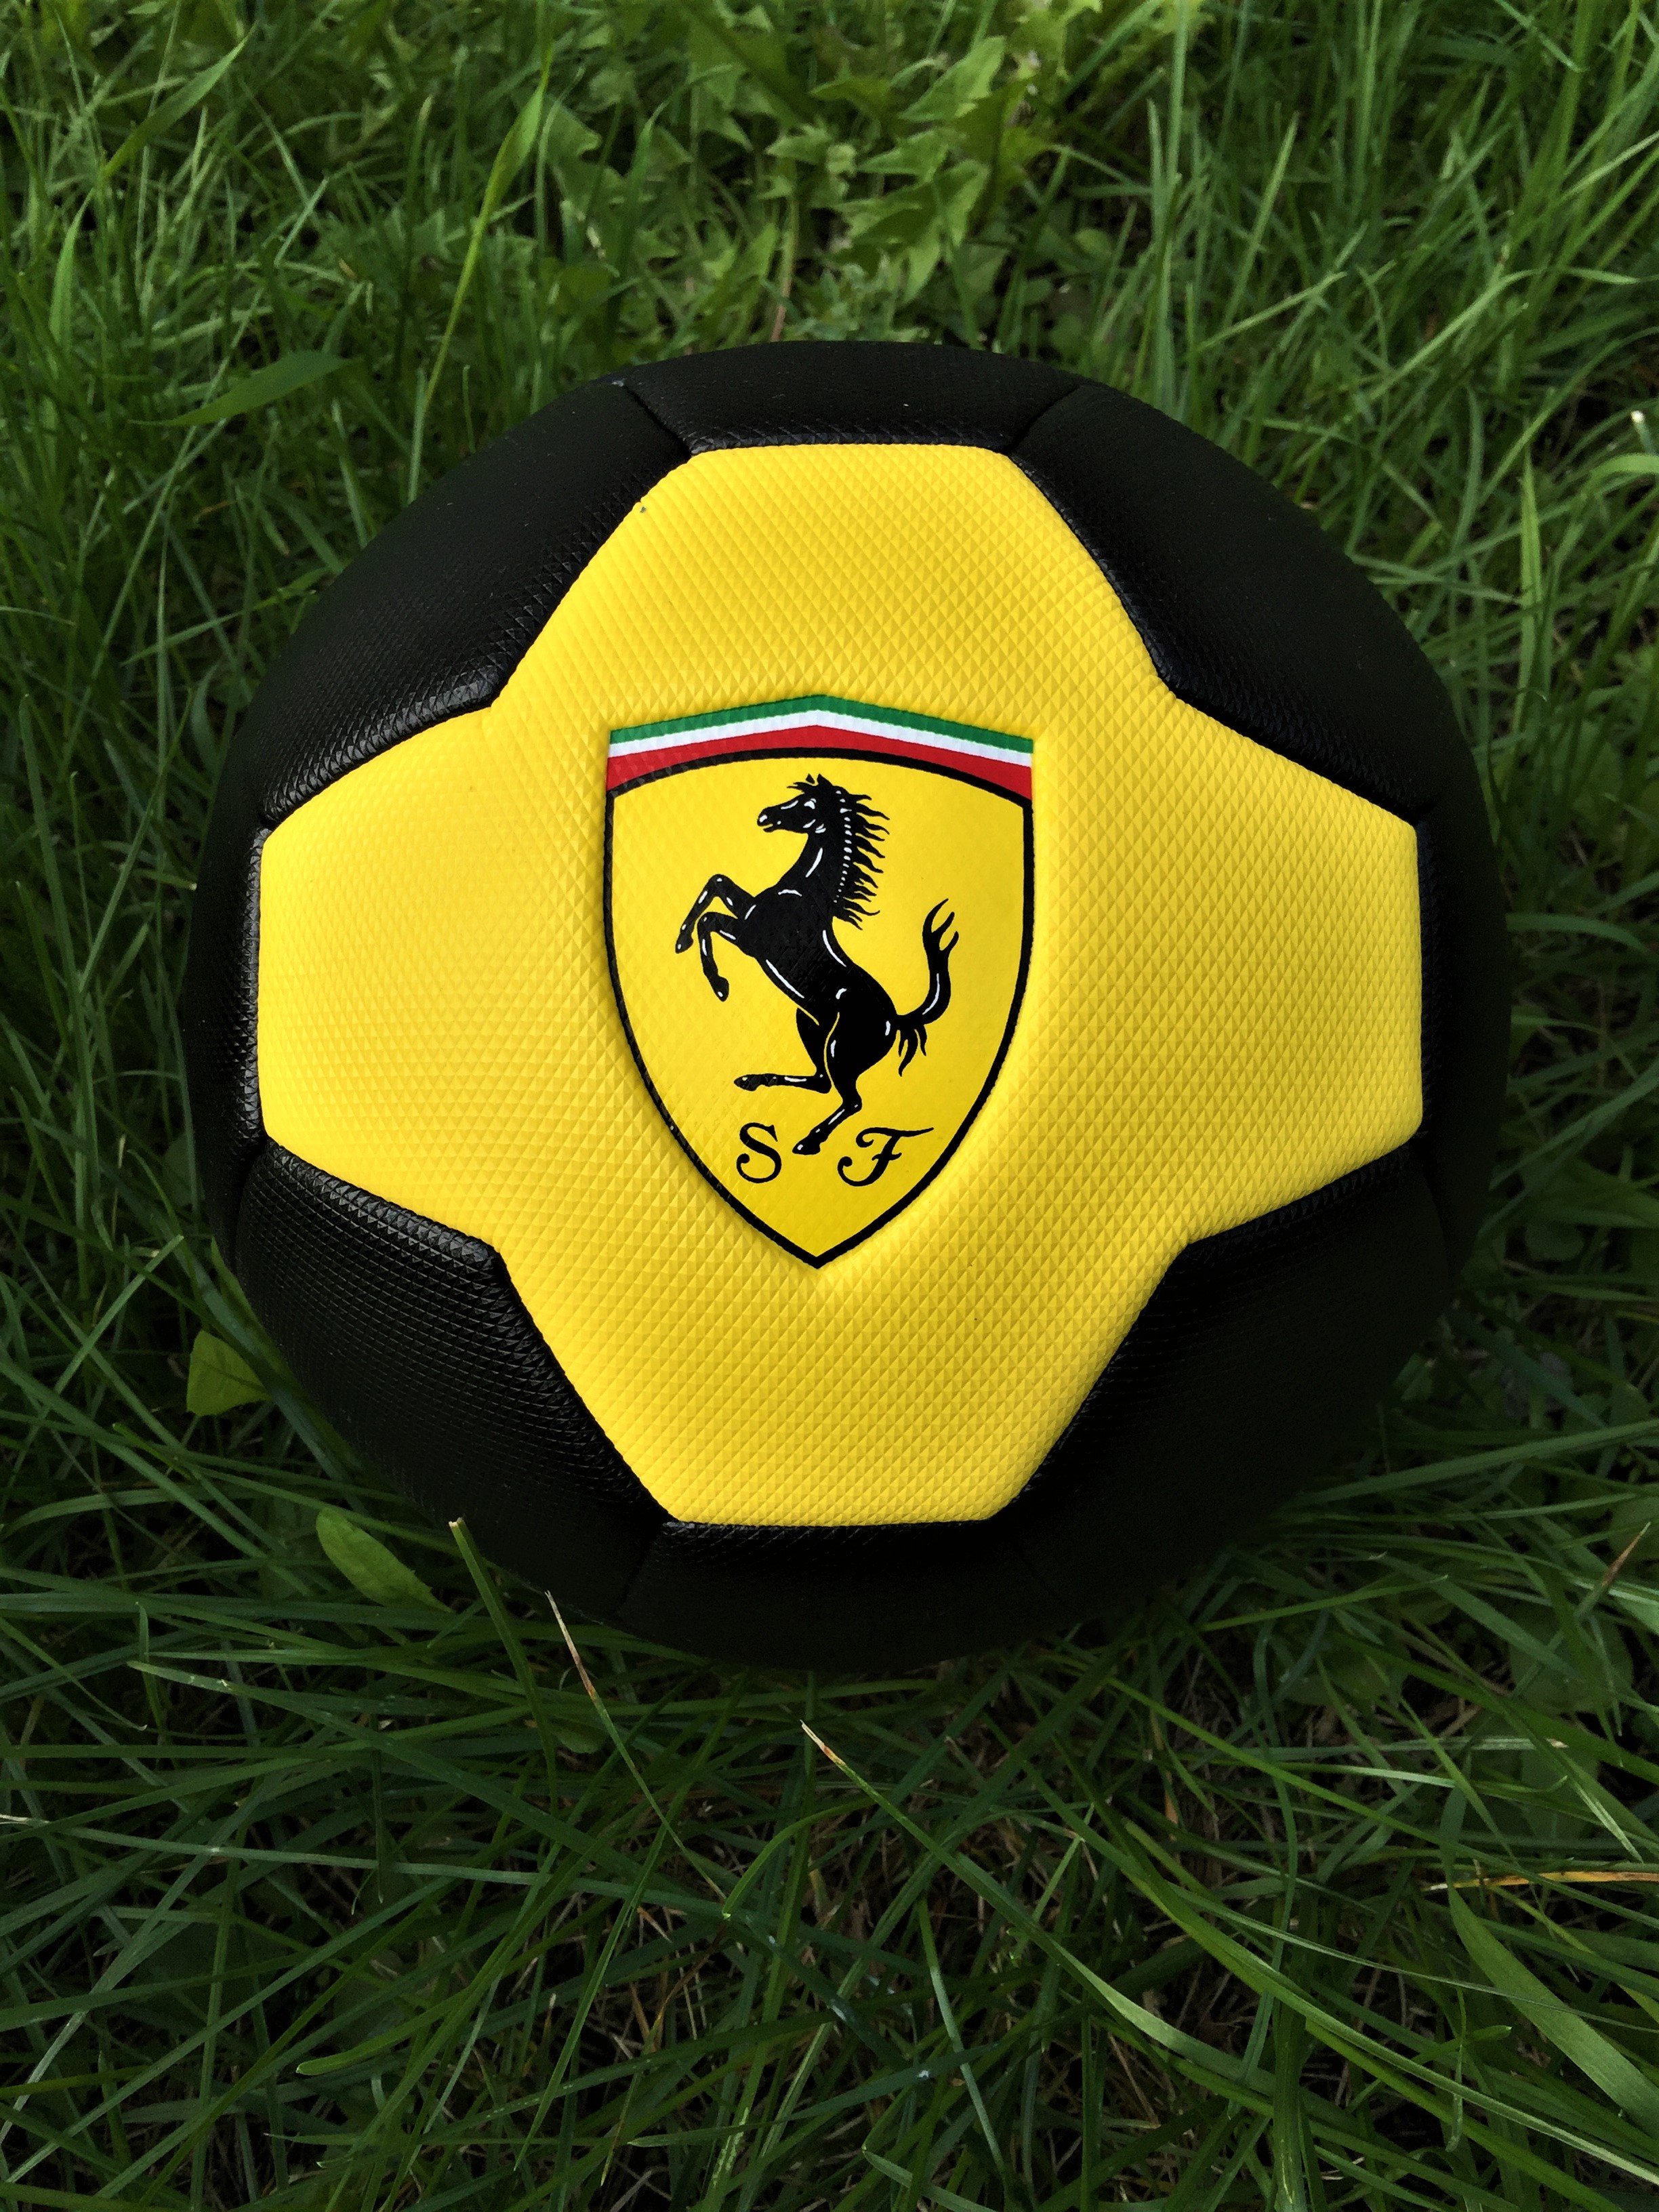 М'яч футбольний Ferrari р.5 Жовто-чорний F661